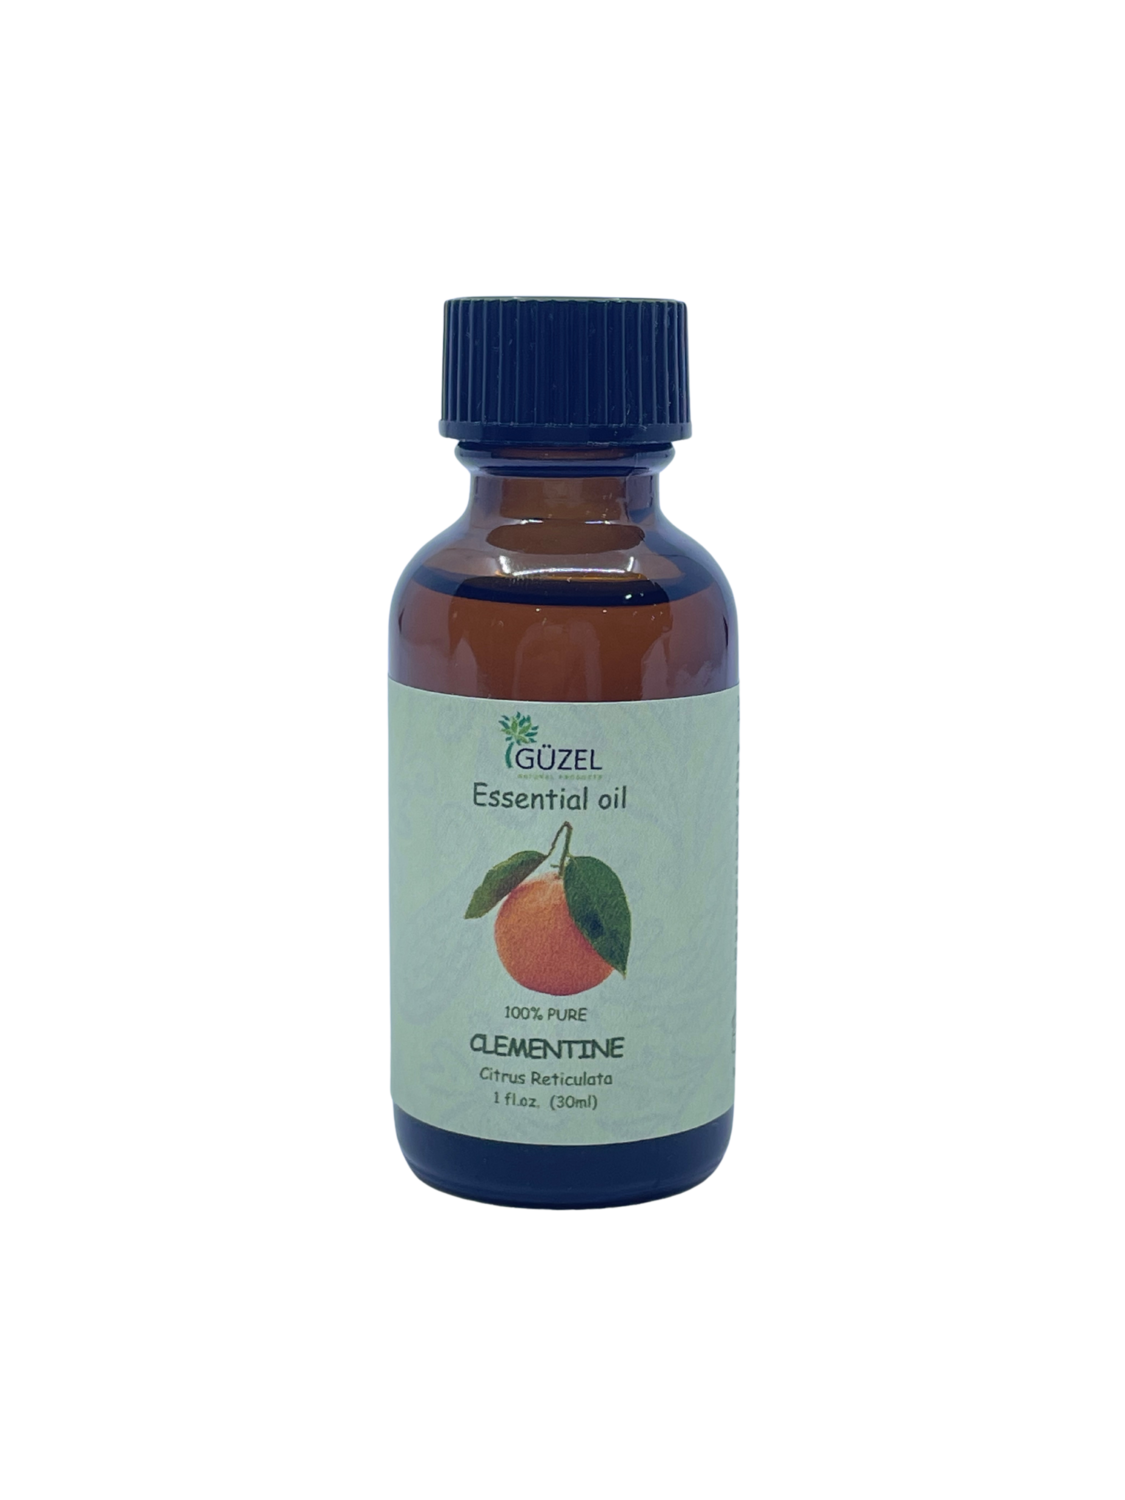 Clementine essential oil